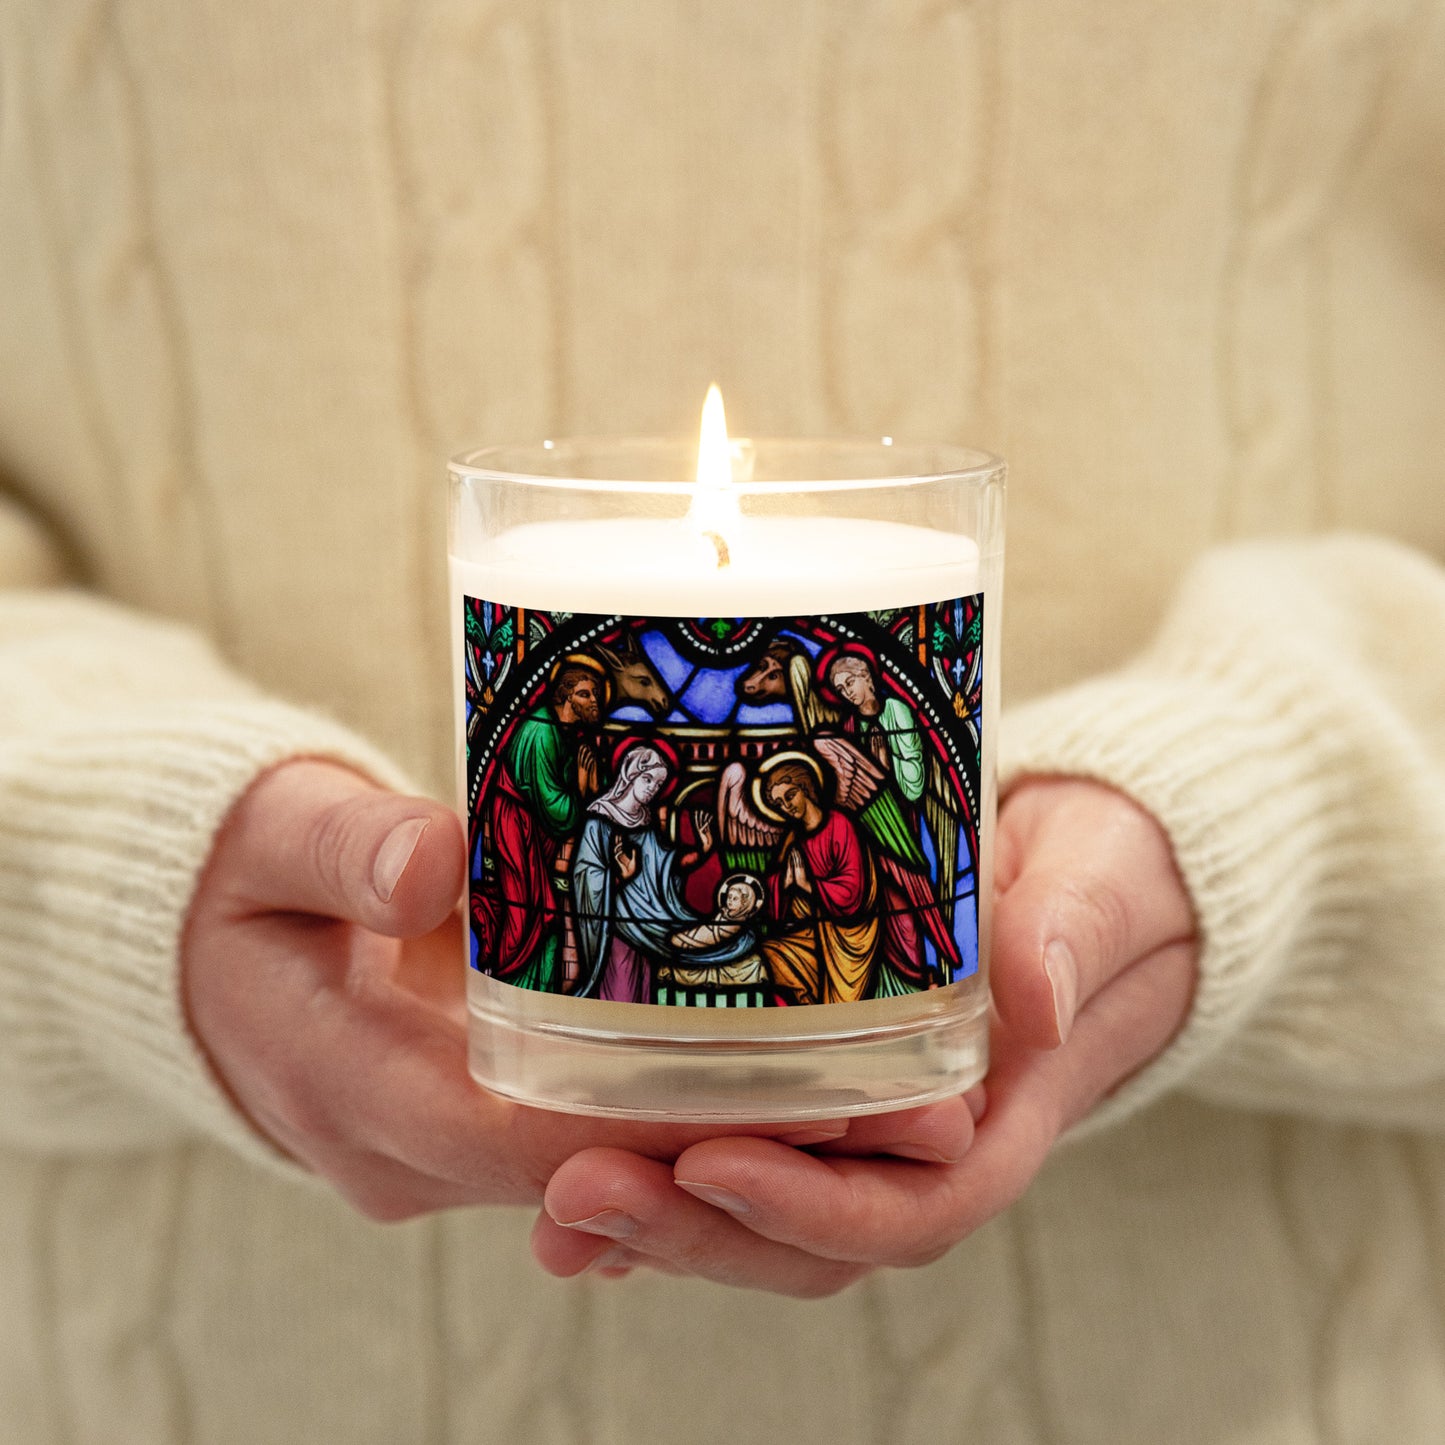 Nativity Scene Stained Glass Style Soy Candle (JMJ) - Christi Studio